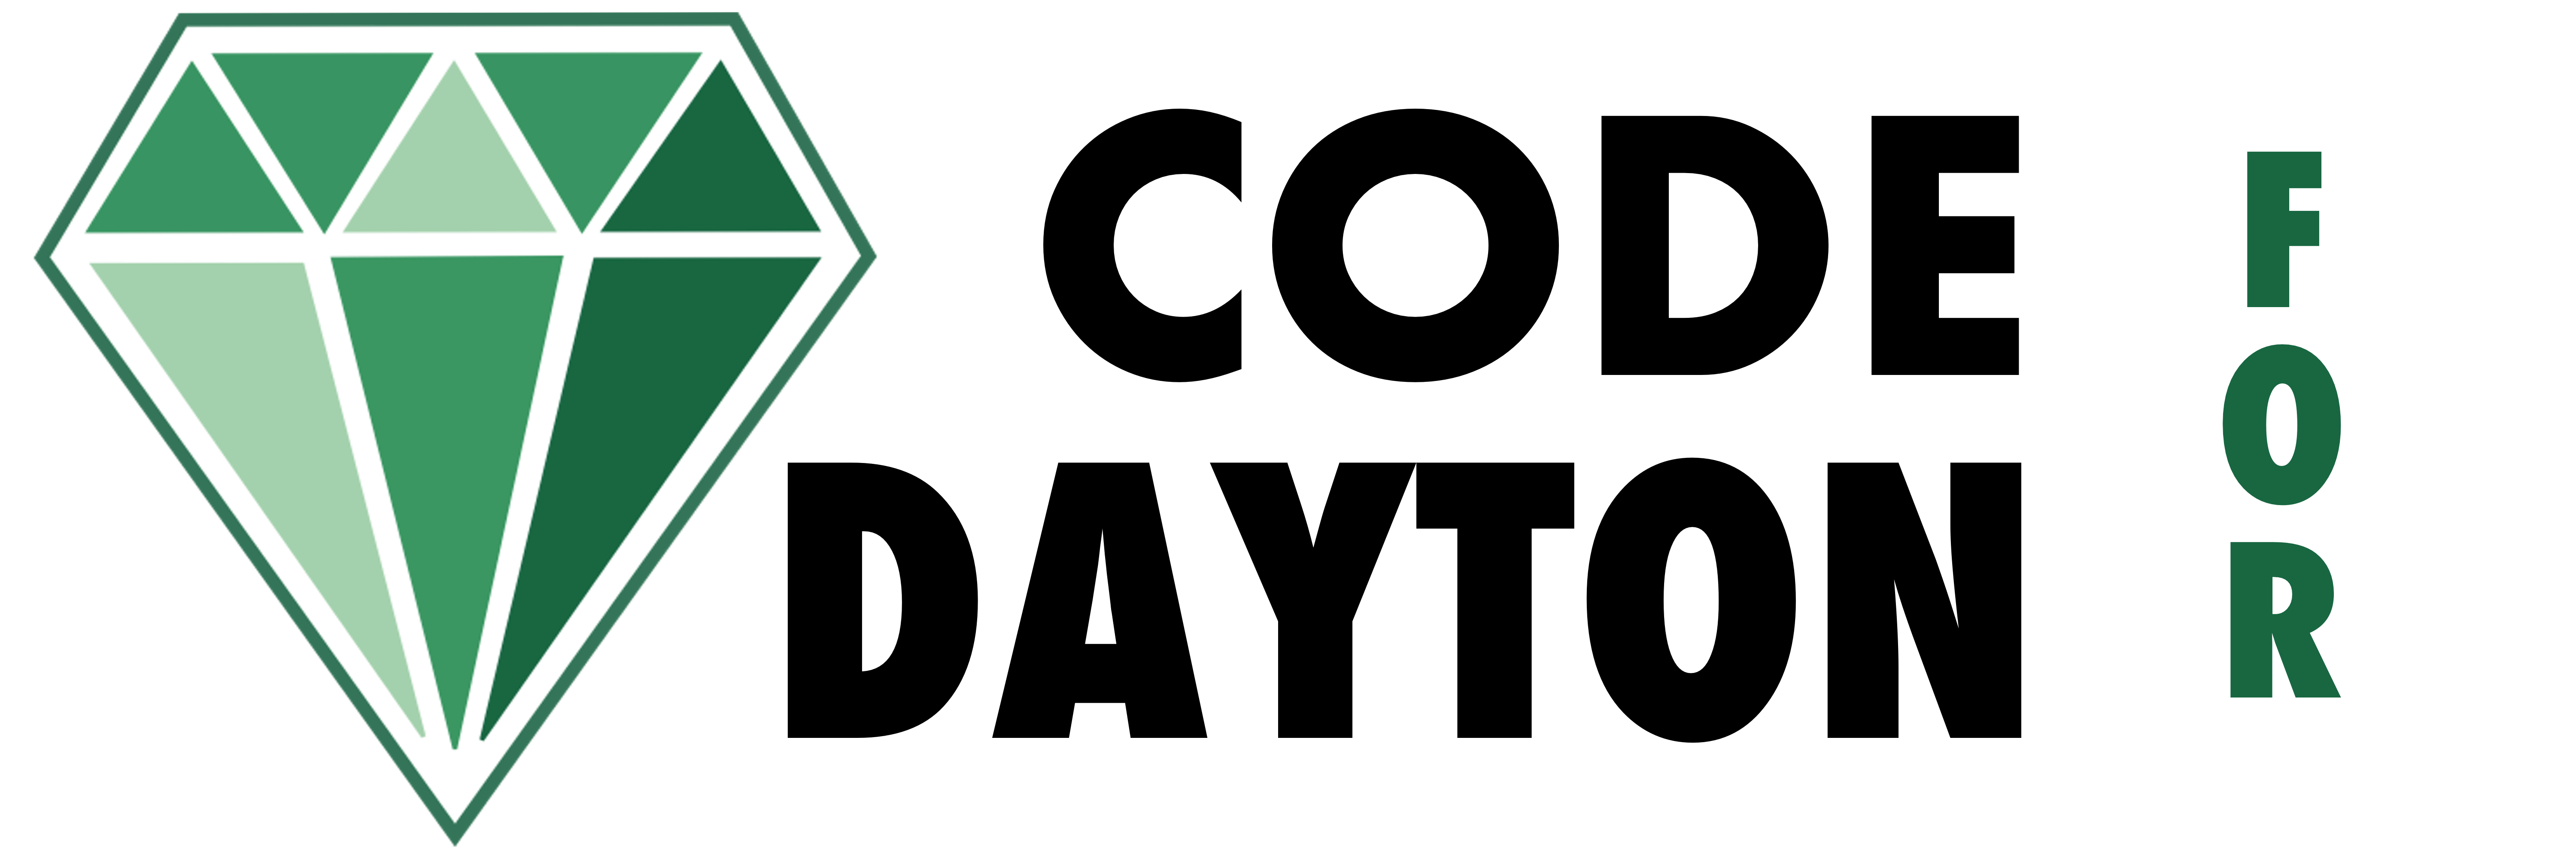 Code For Dayton